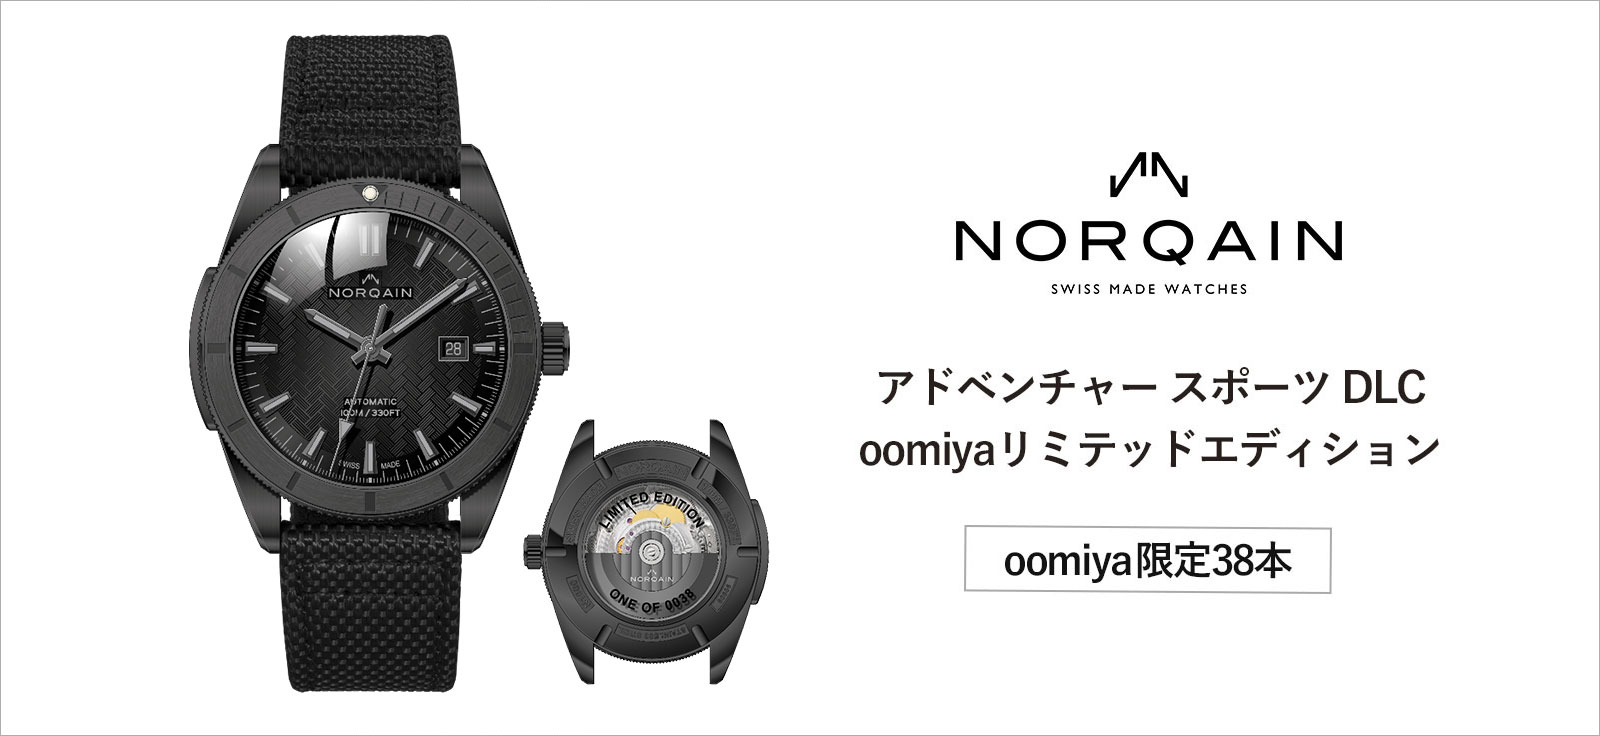 【 NORQAIN 】アドベンチャースポーツ oomiya限定モデル-NORQAIN -1634272301555